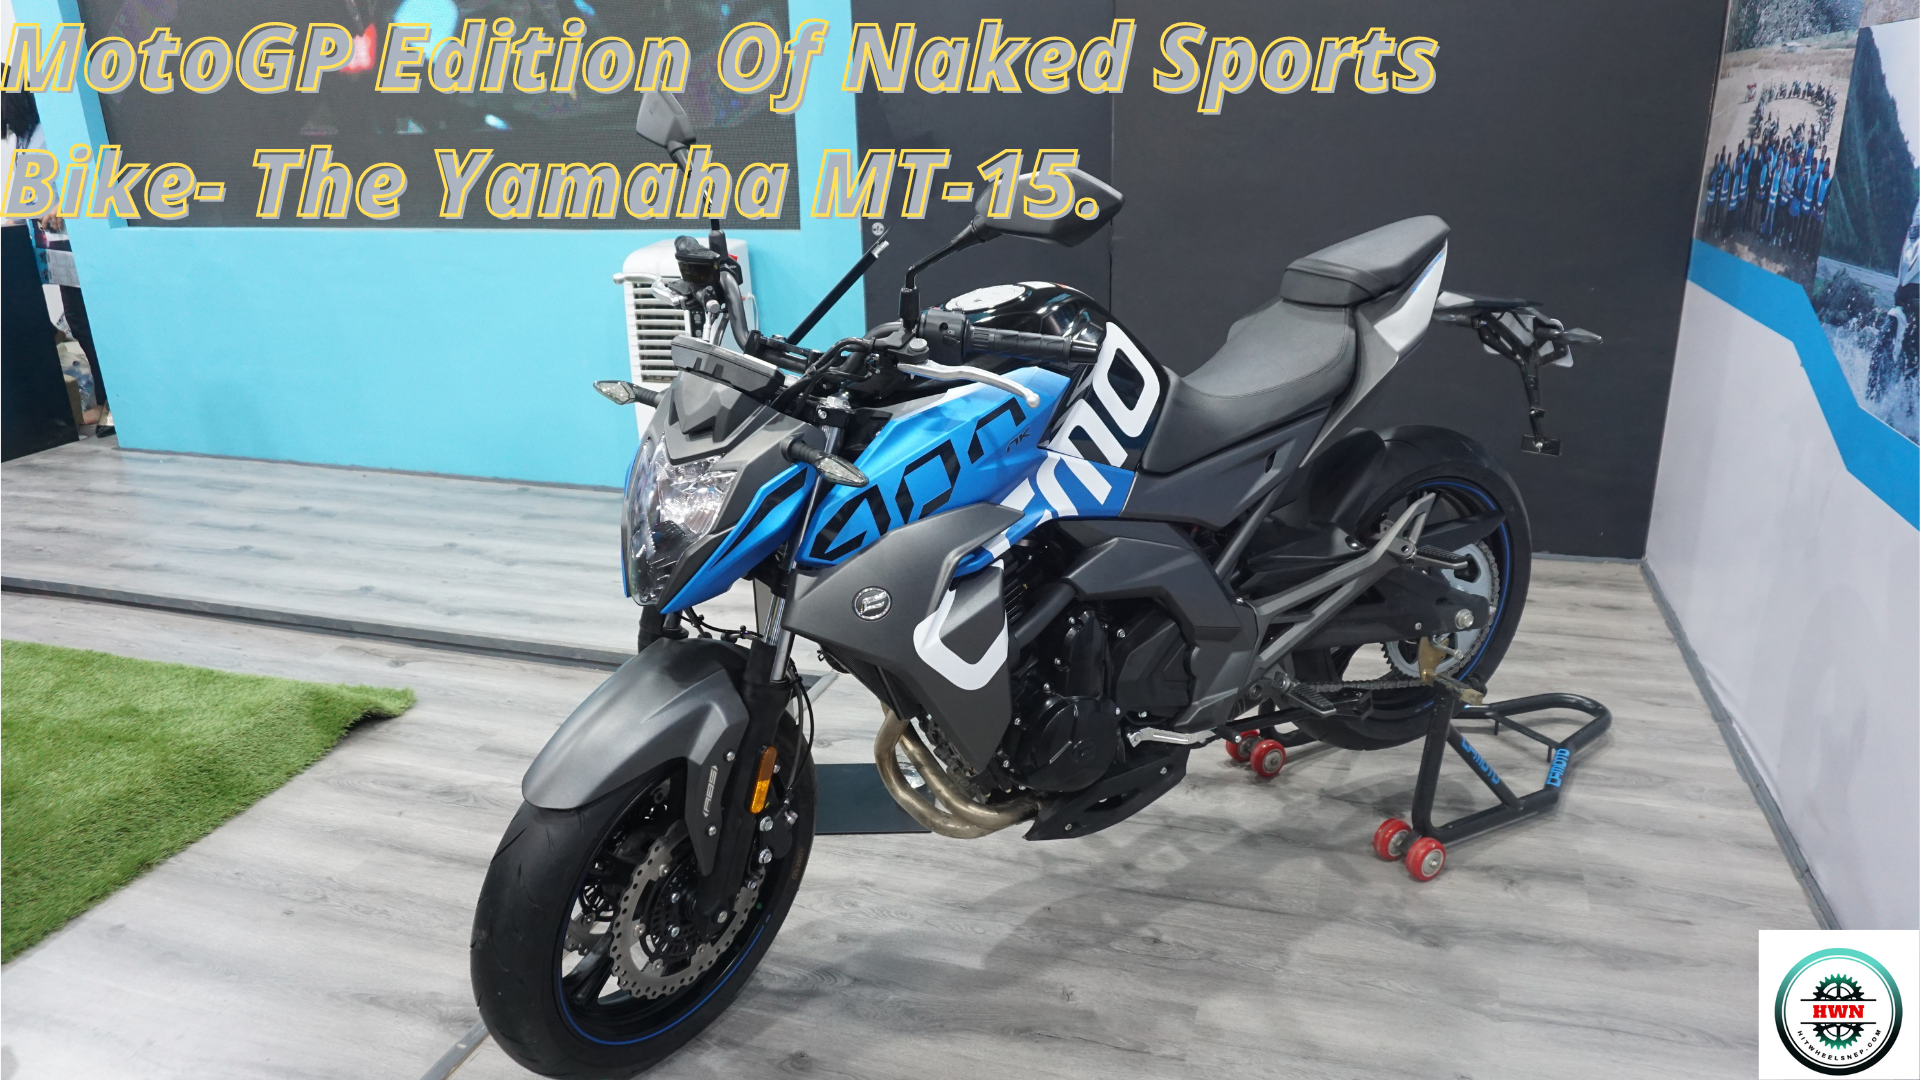 MotoGP Edition Of Naked Sports Bike- The Yamaha MT-15.